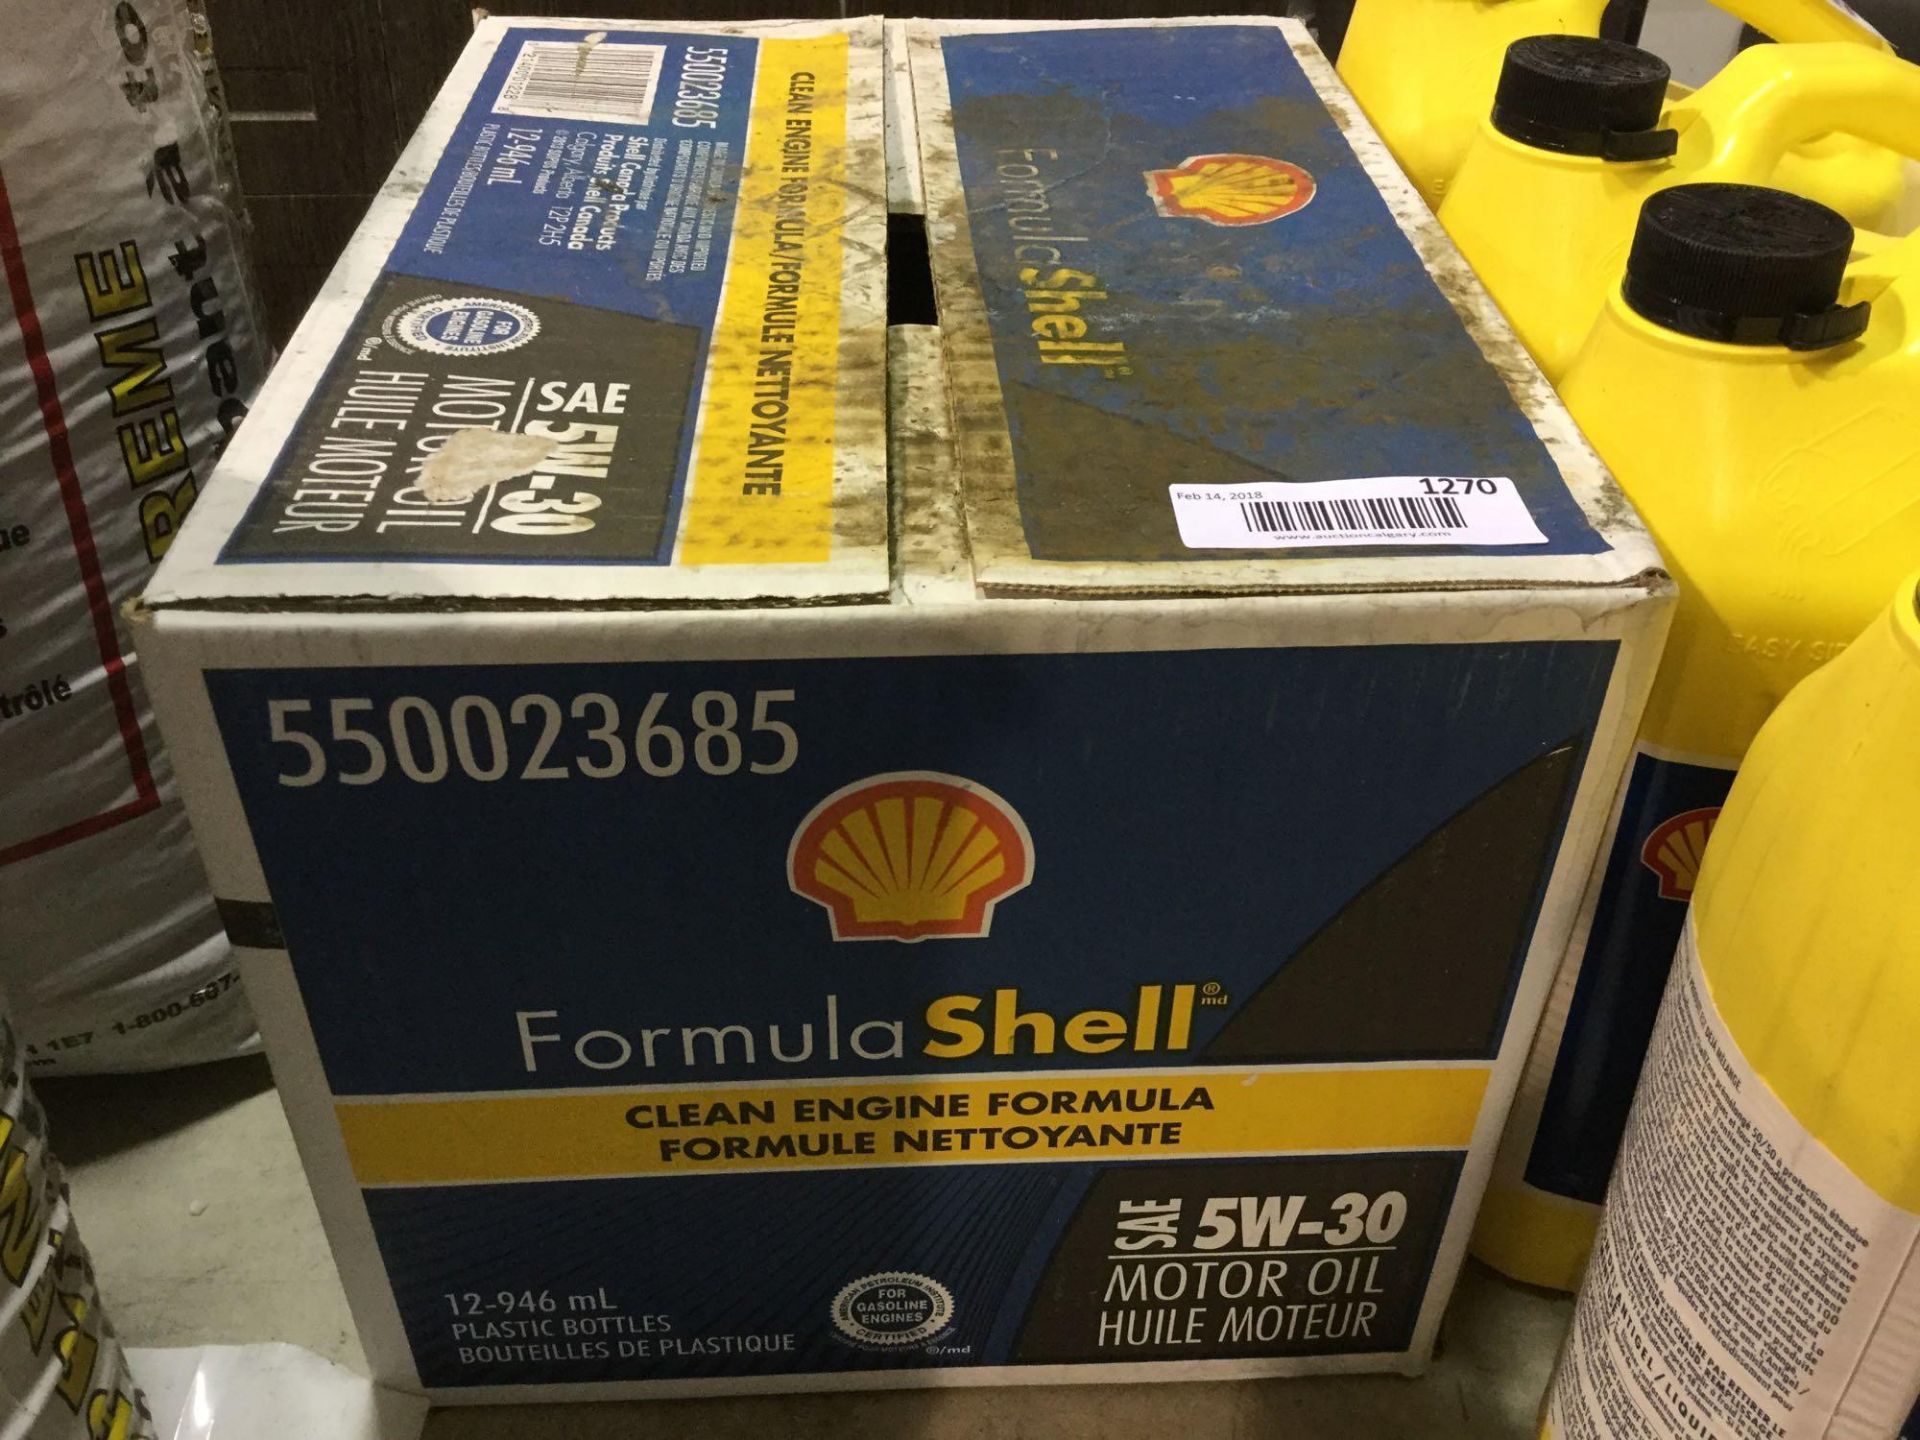 Case of 12 x 946 mL 5w-30 Formula Shell Motor Oil